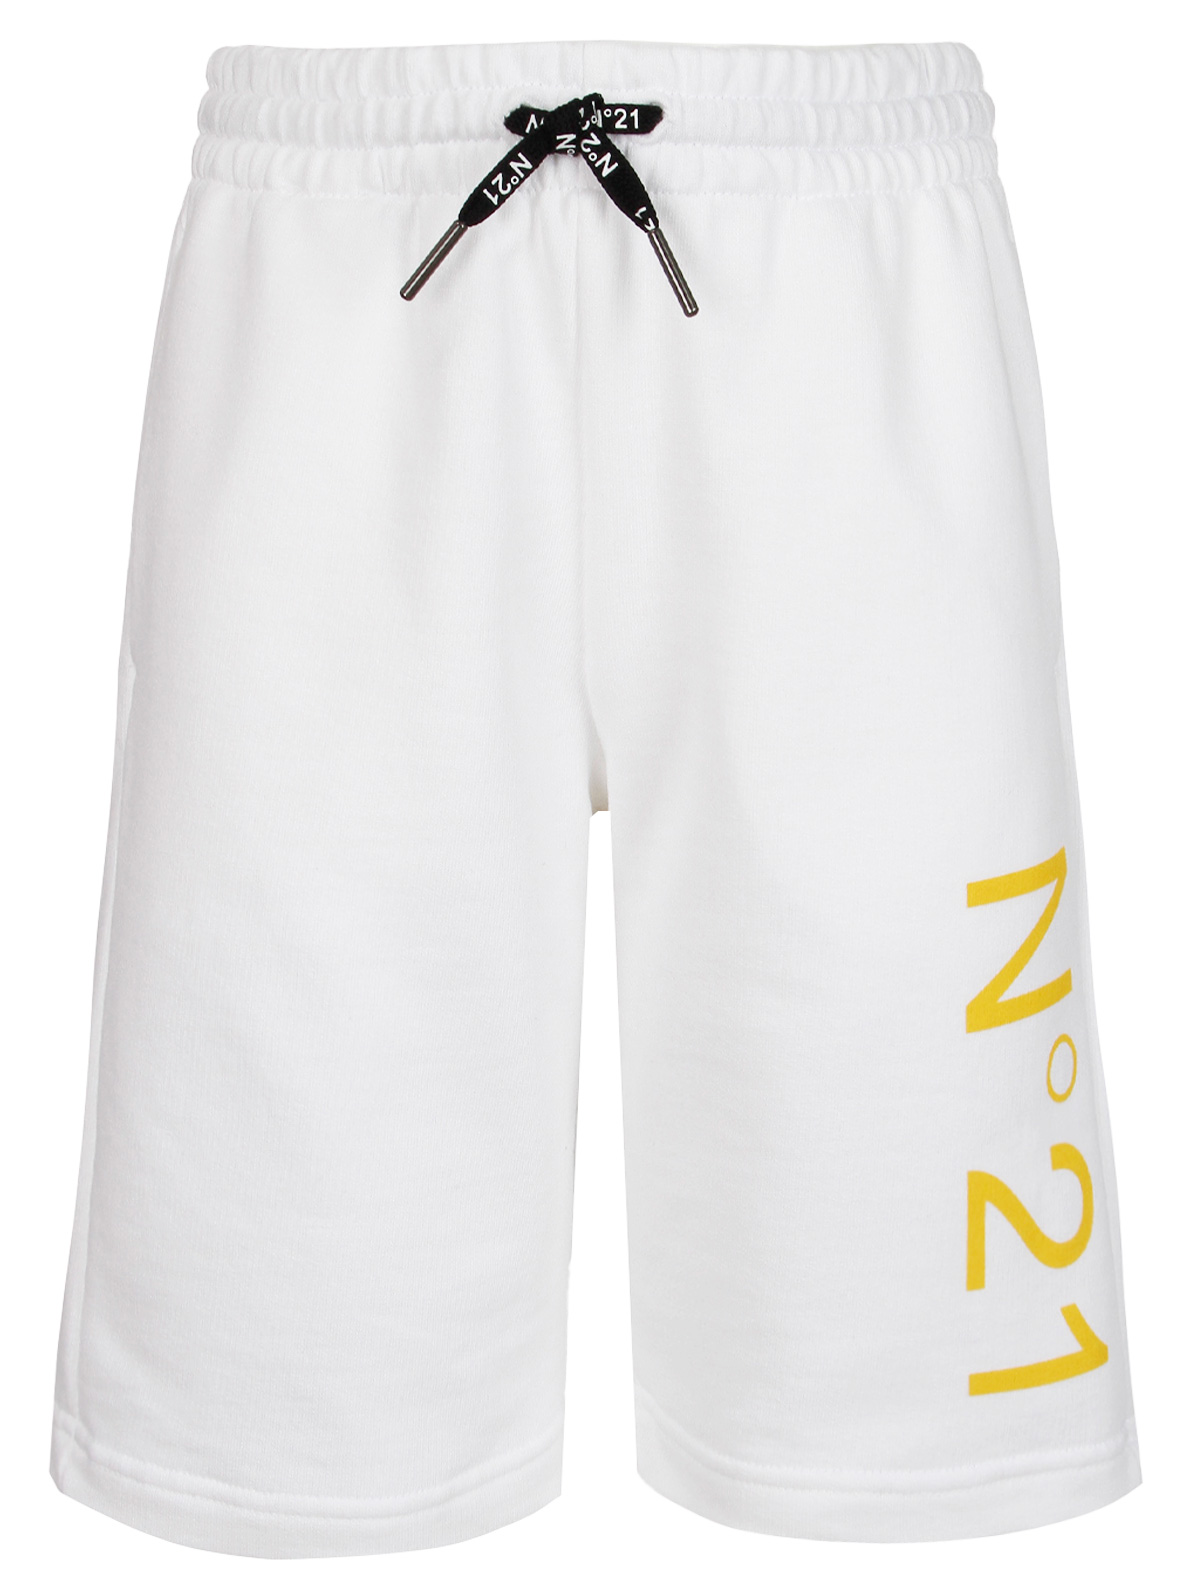 шорты n21 для мальчика, белые